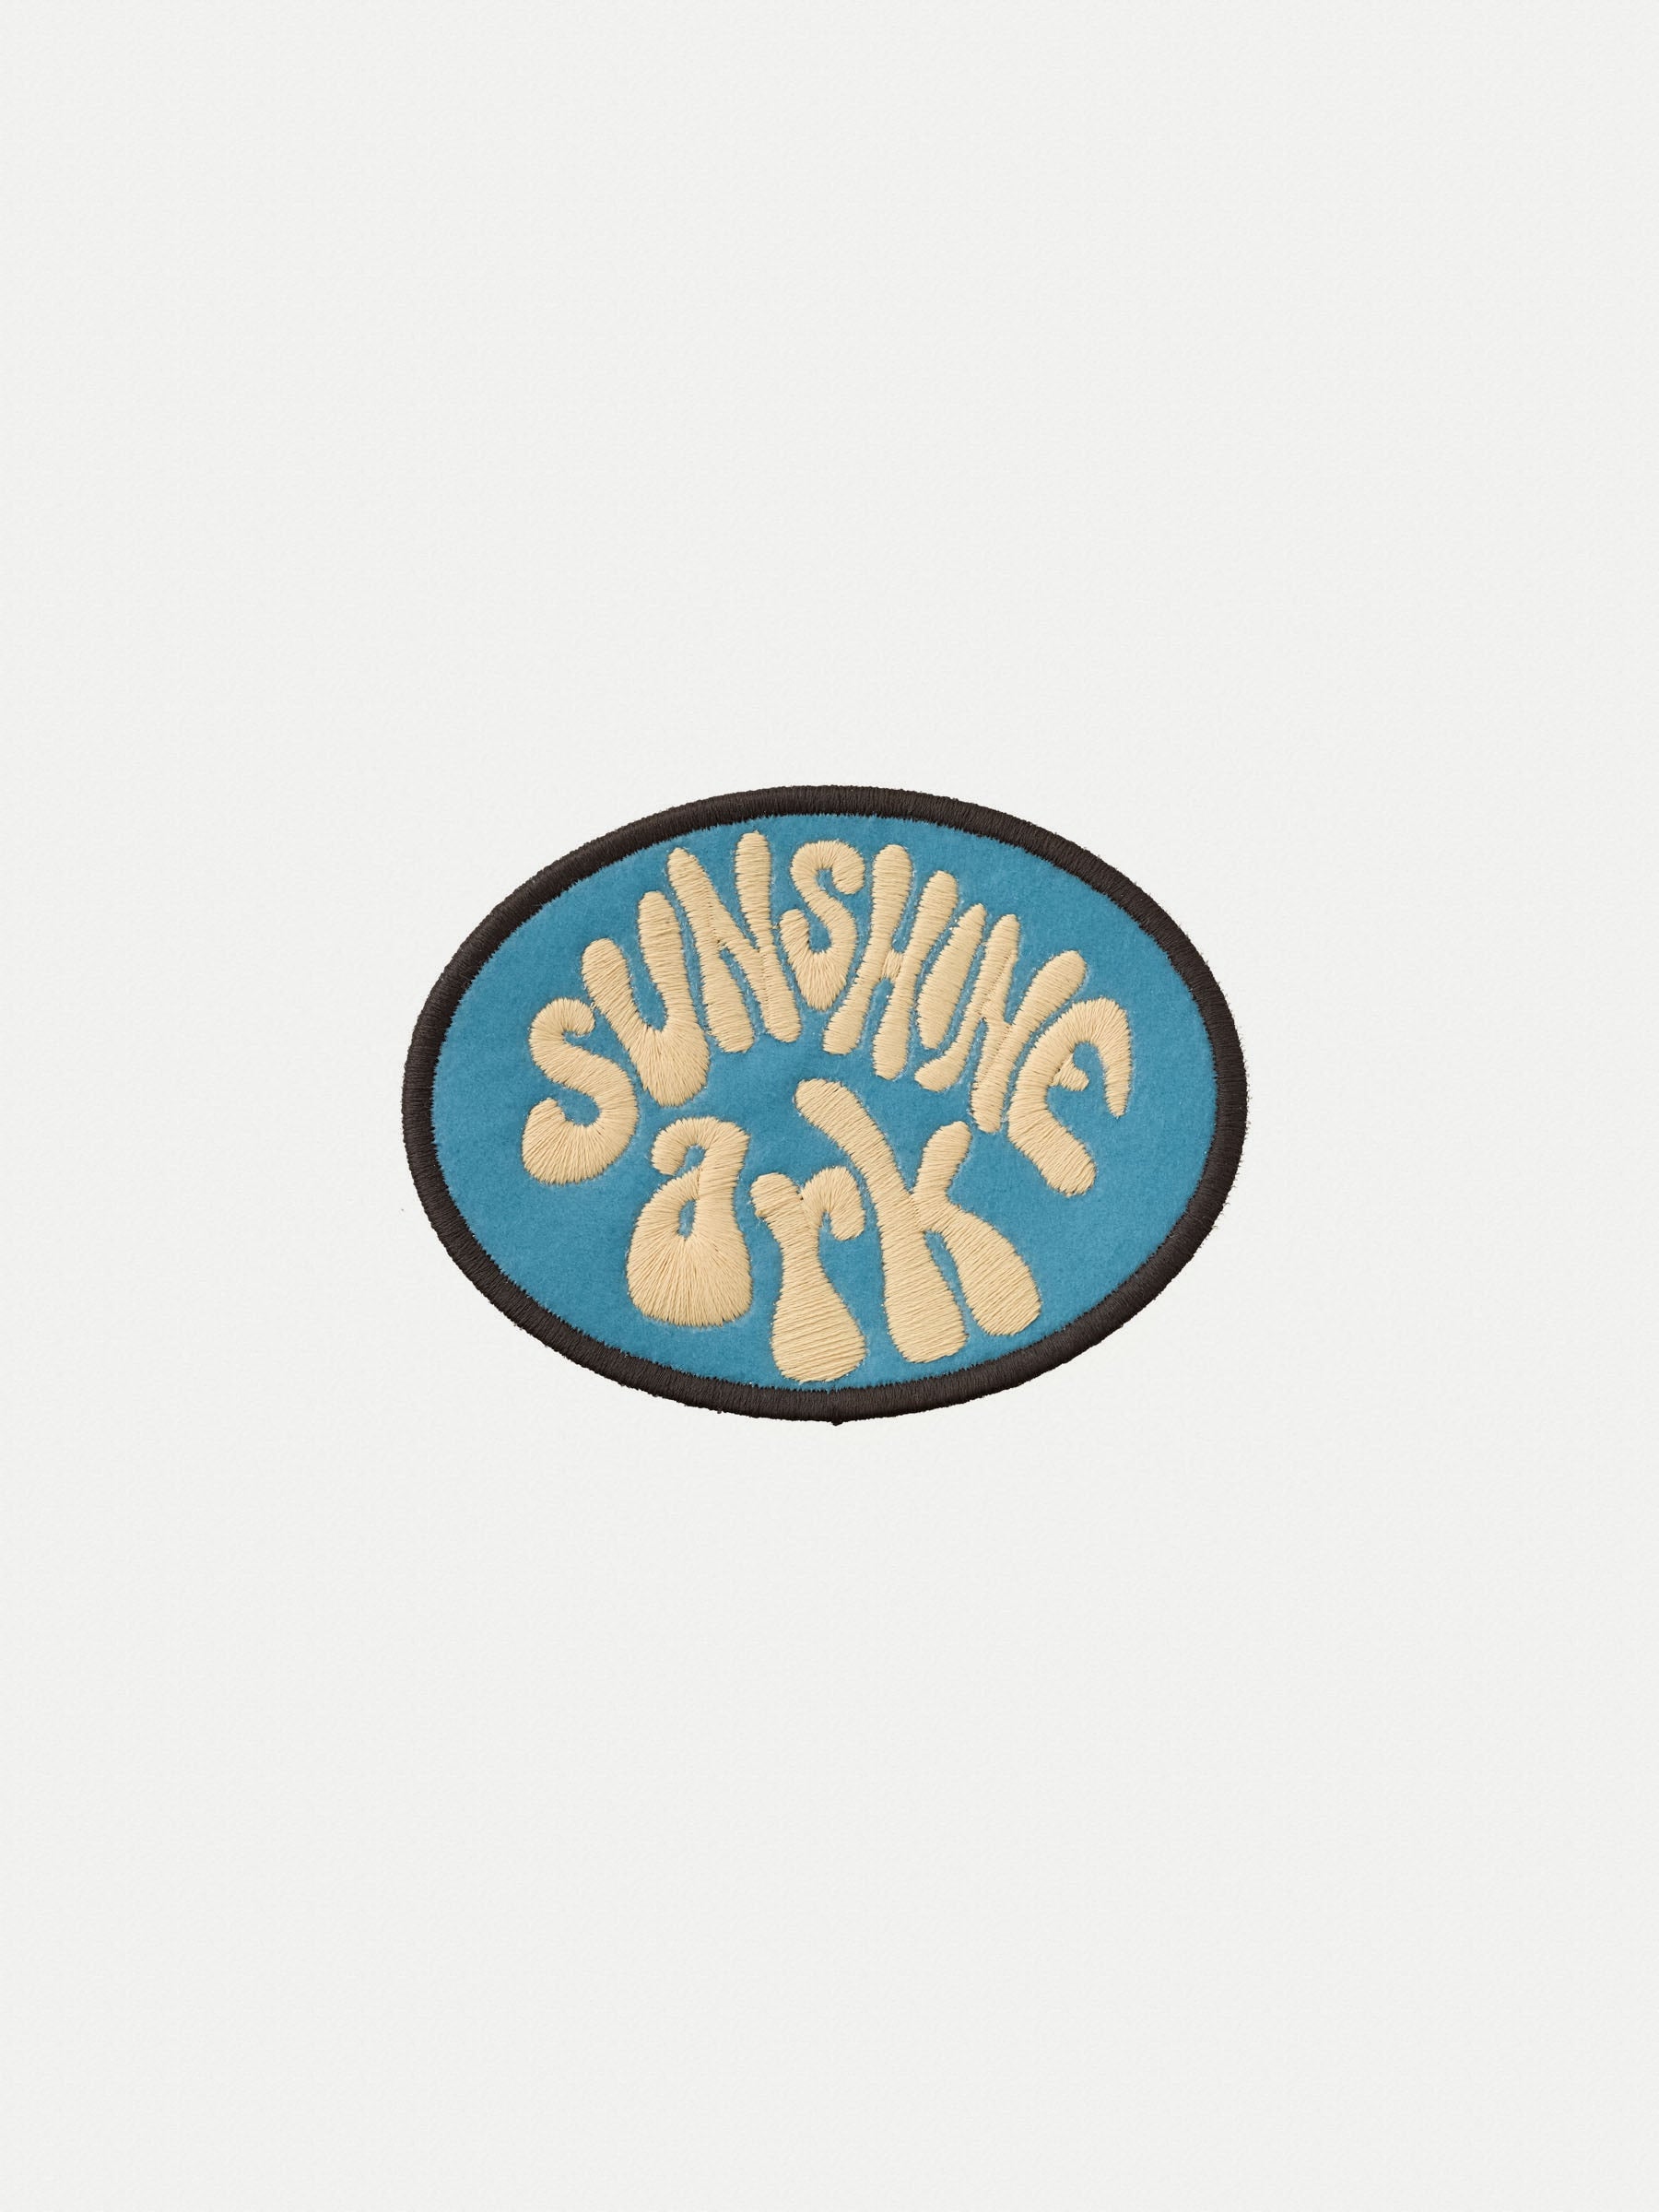 Nudie - Woven Patch Sunshine Ark - Blue/Beige